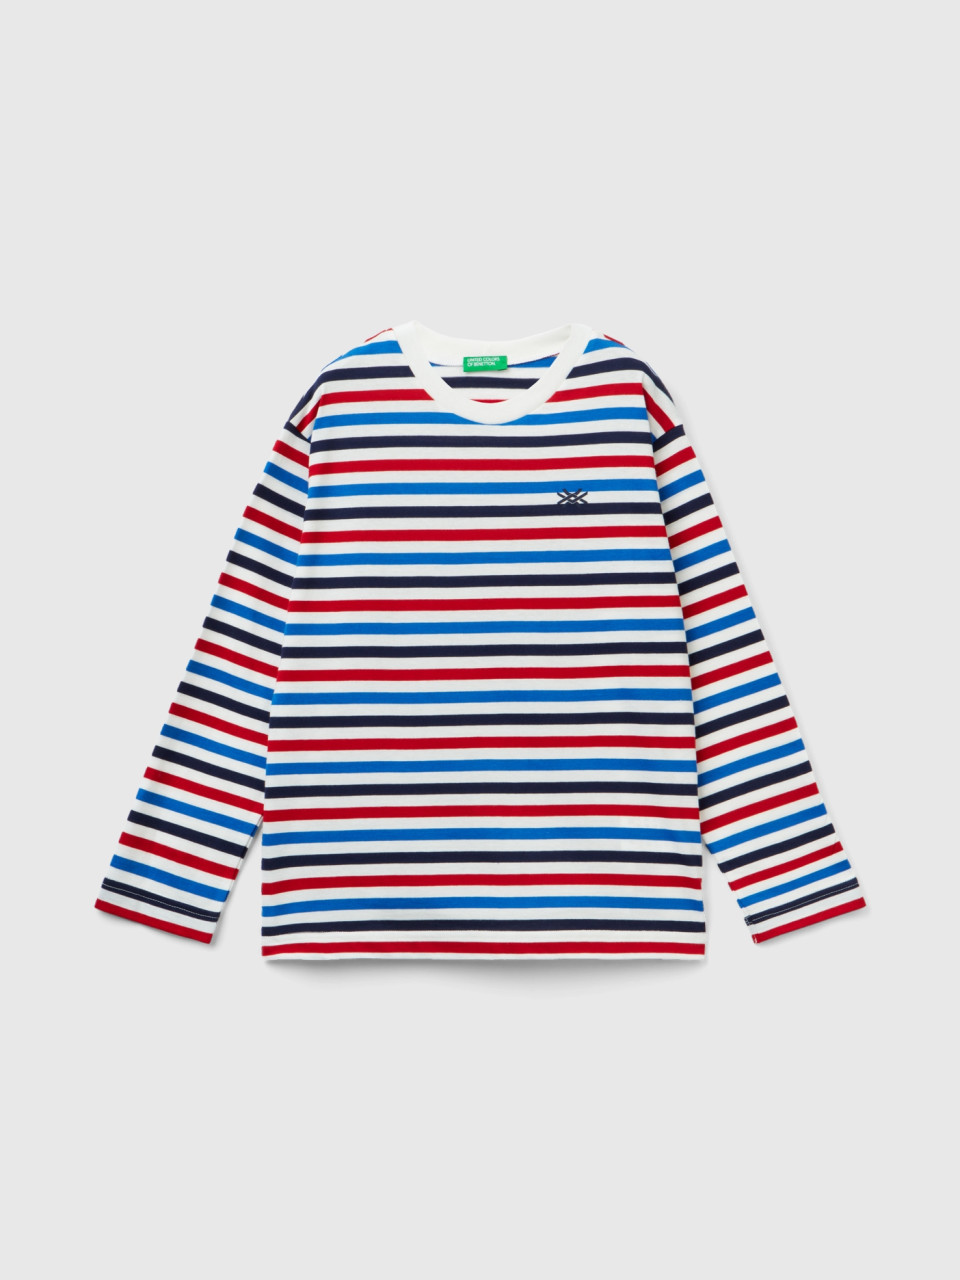 Benetton, Striped T-shirt In 100% Cotton, Multi-color, Kids